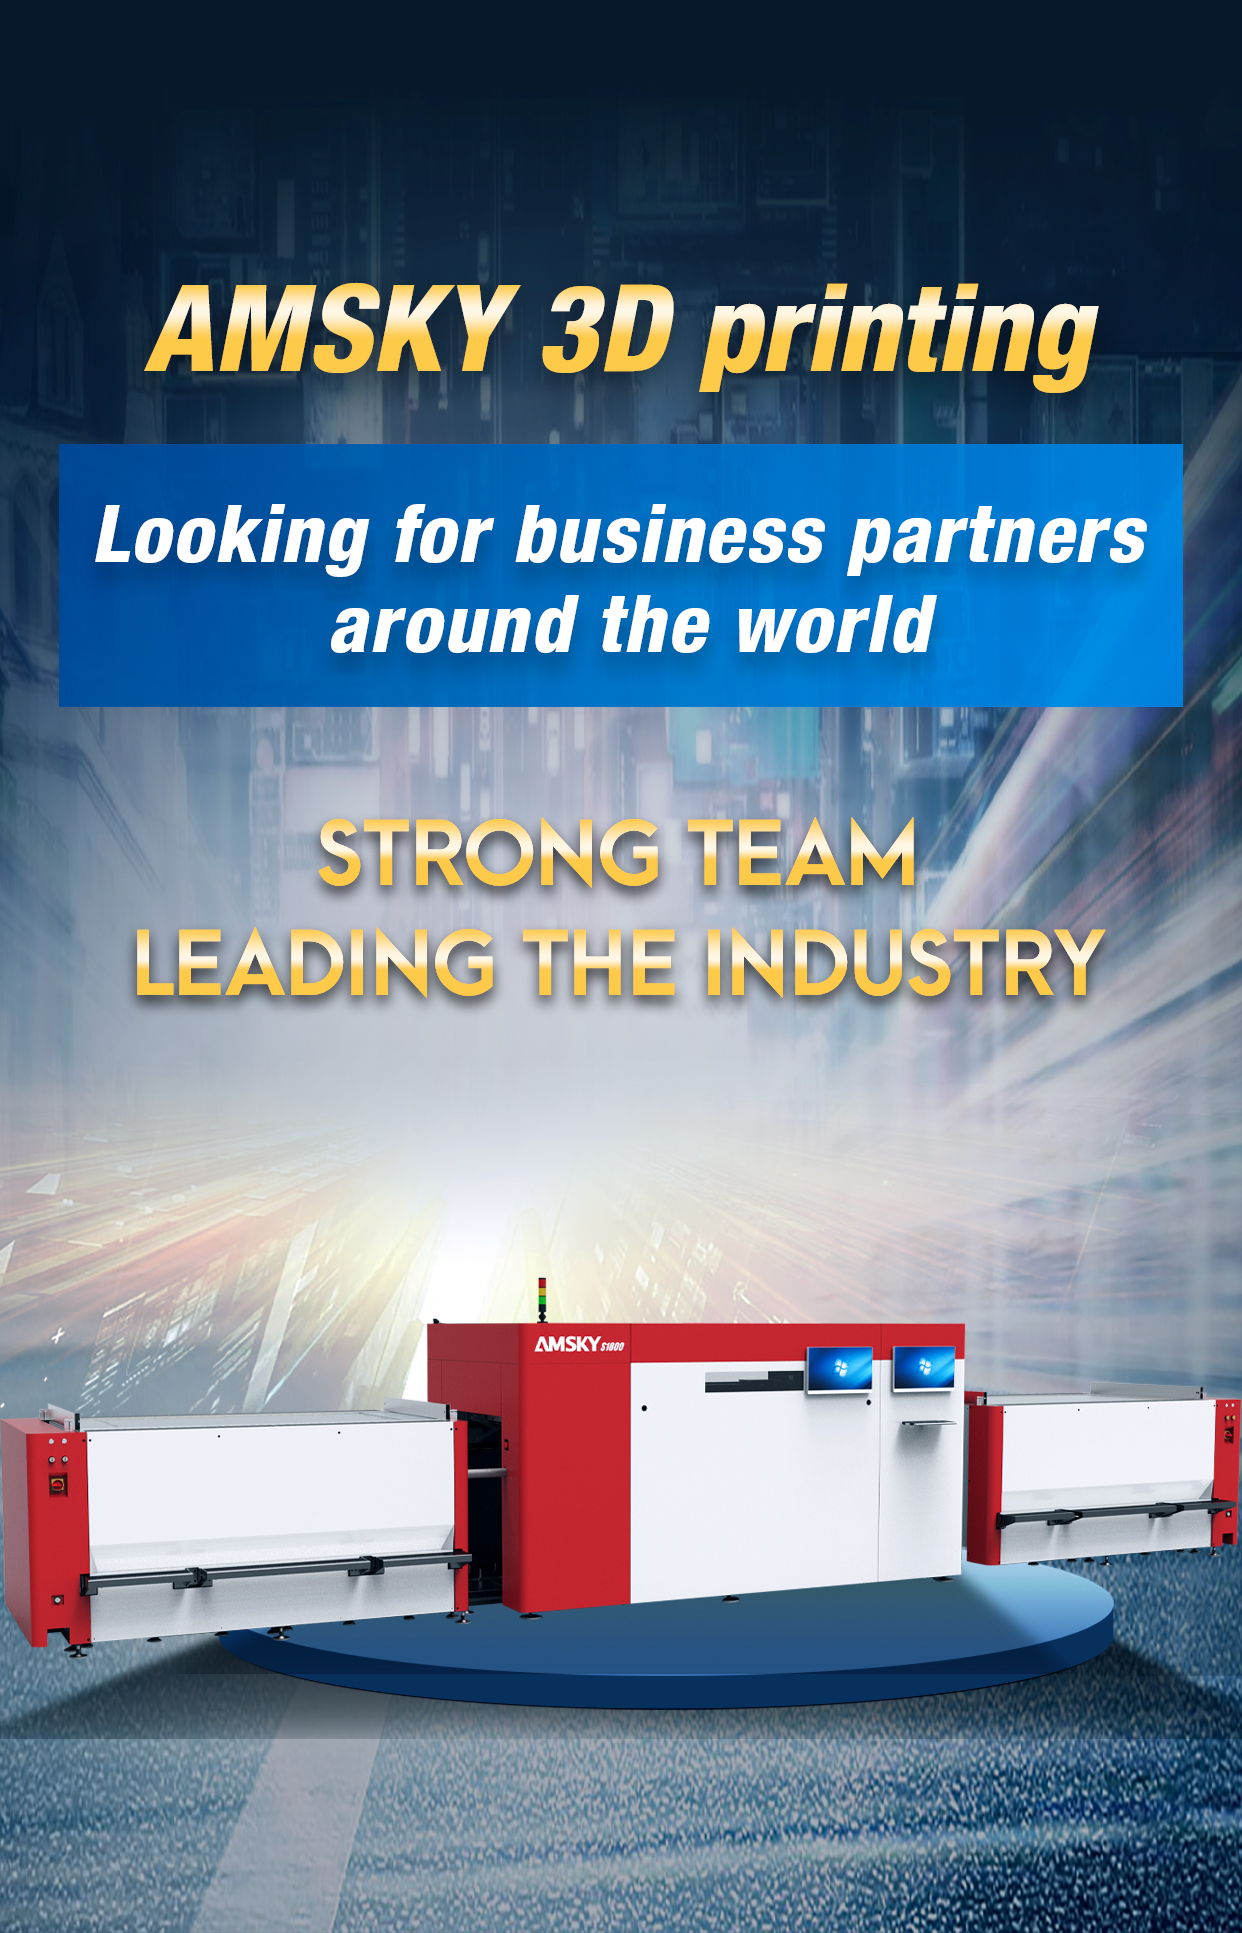 AMSKY 3D printing center